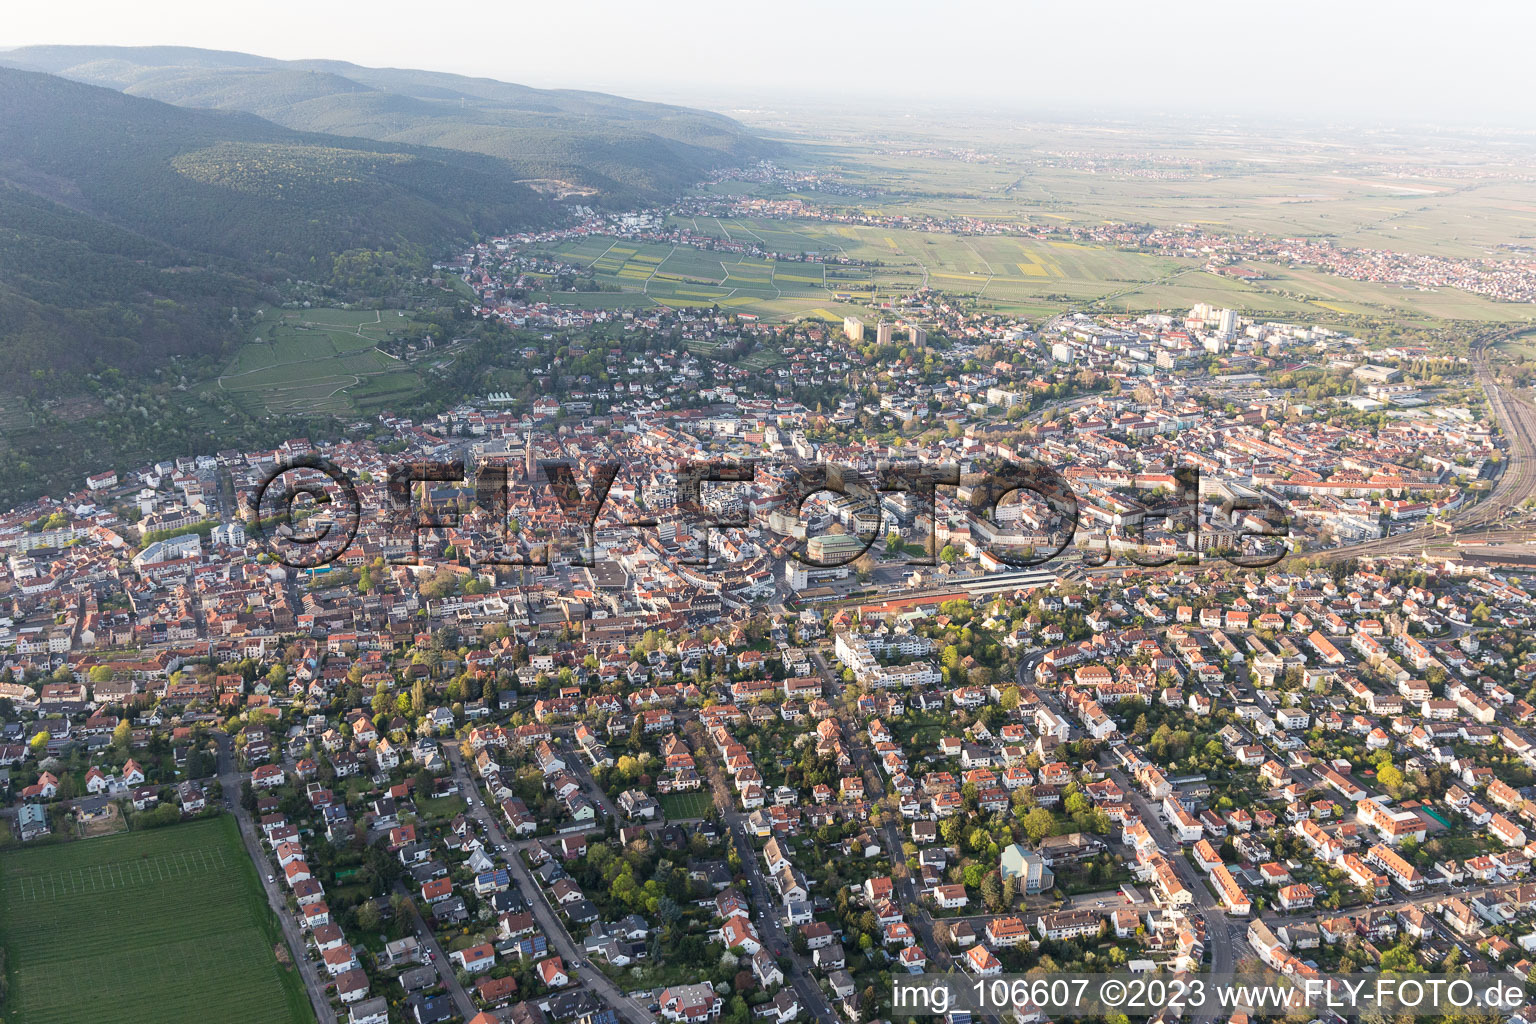 Vue aérienne de Neustadt an der Weinstraße dans le département Rhénanie-Palatinat, Allemagne